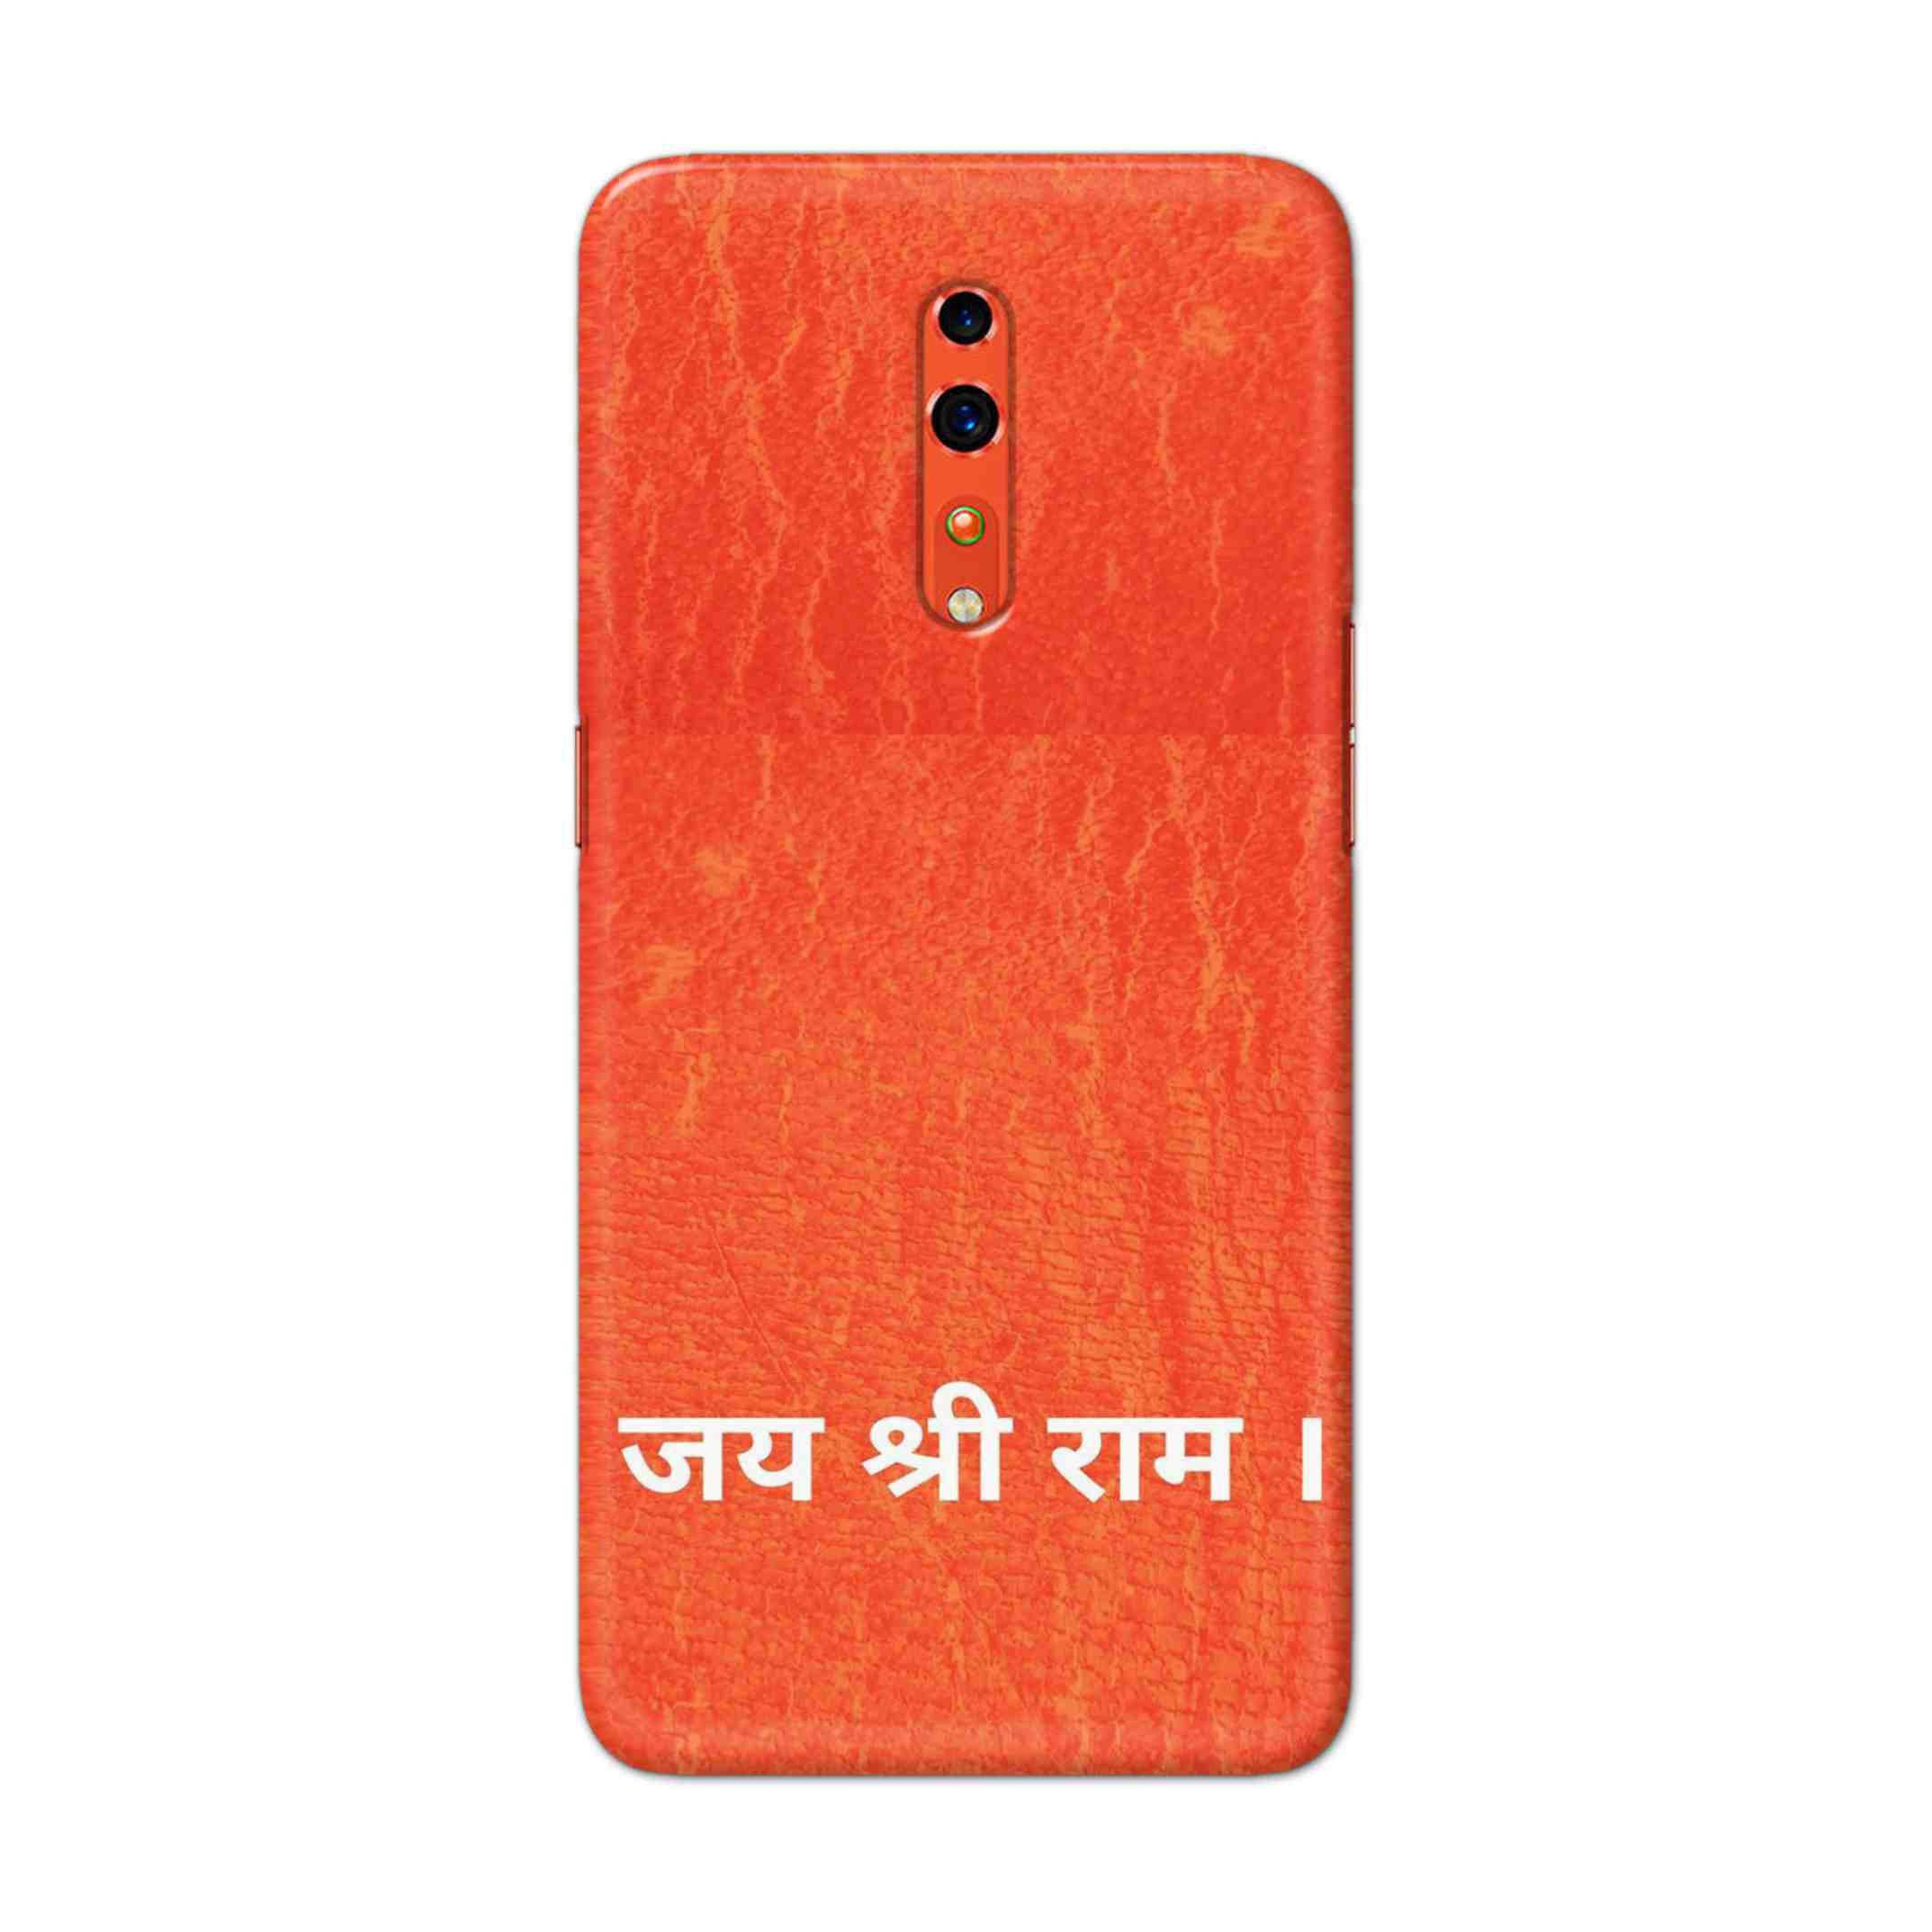 Buy Jai Shree Ram Hard Back Mobile Phone Case Cover For OPPO Reno Z Online